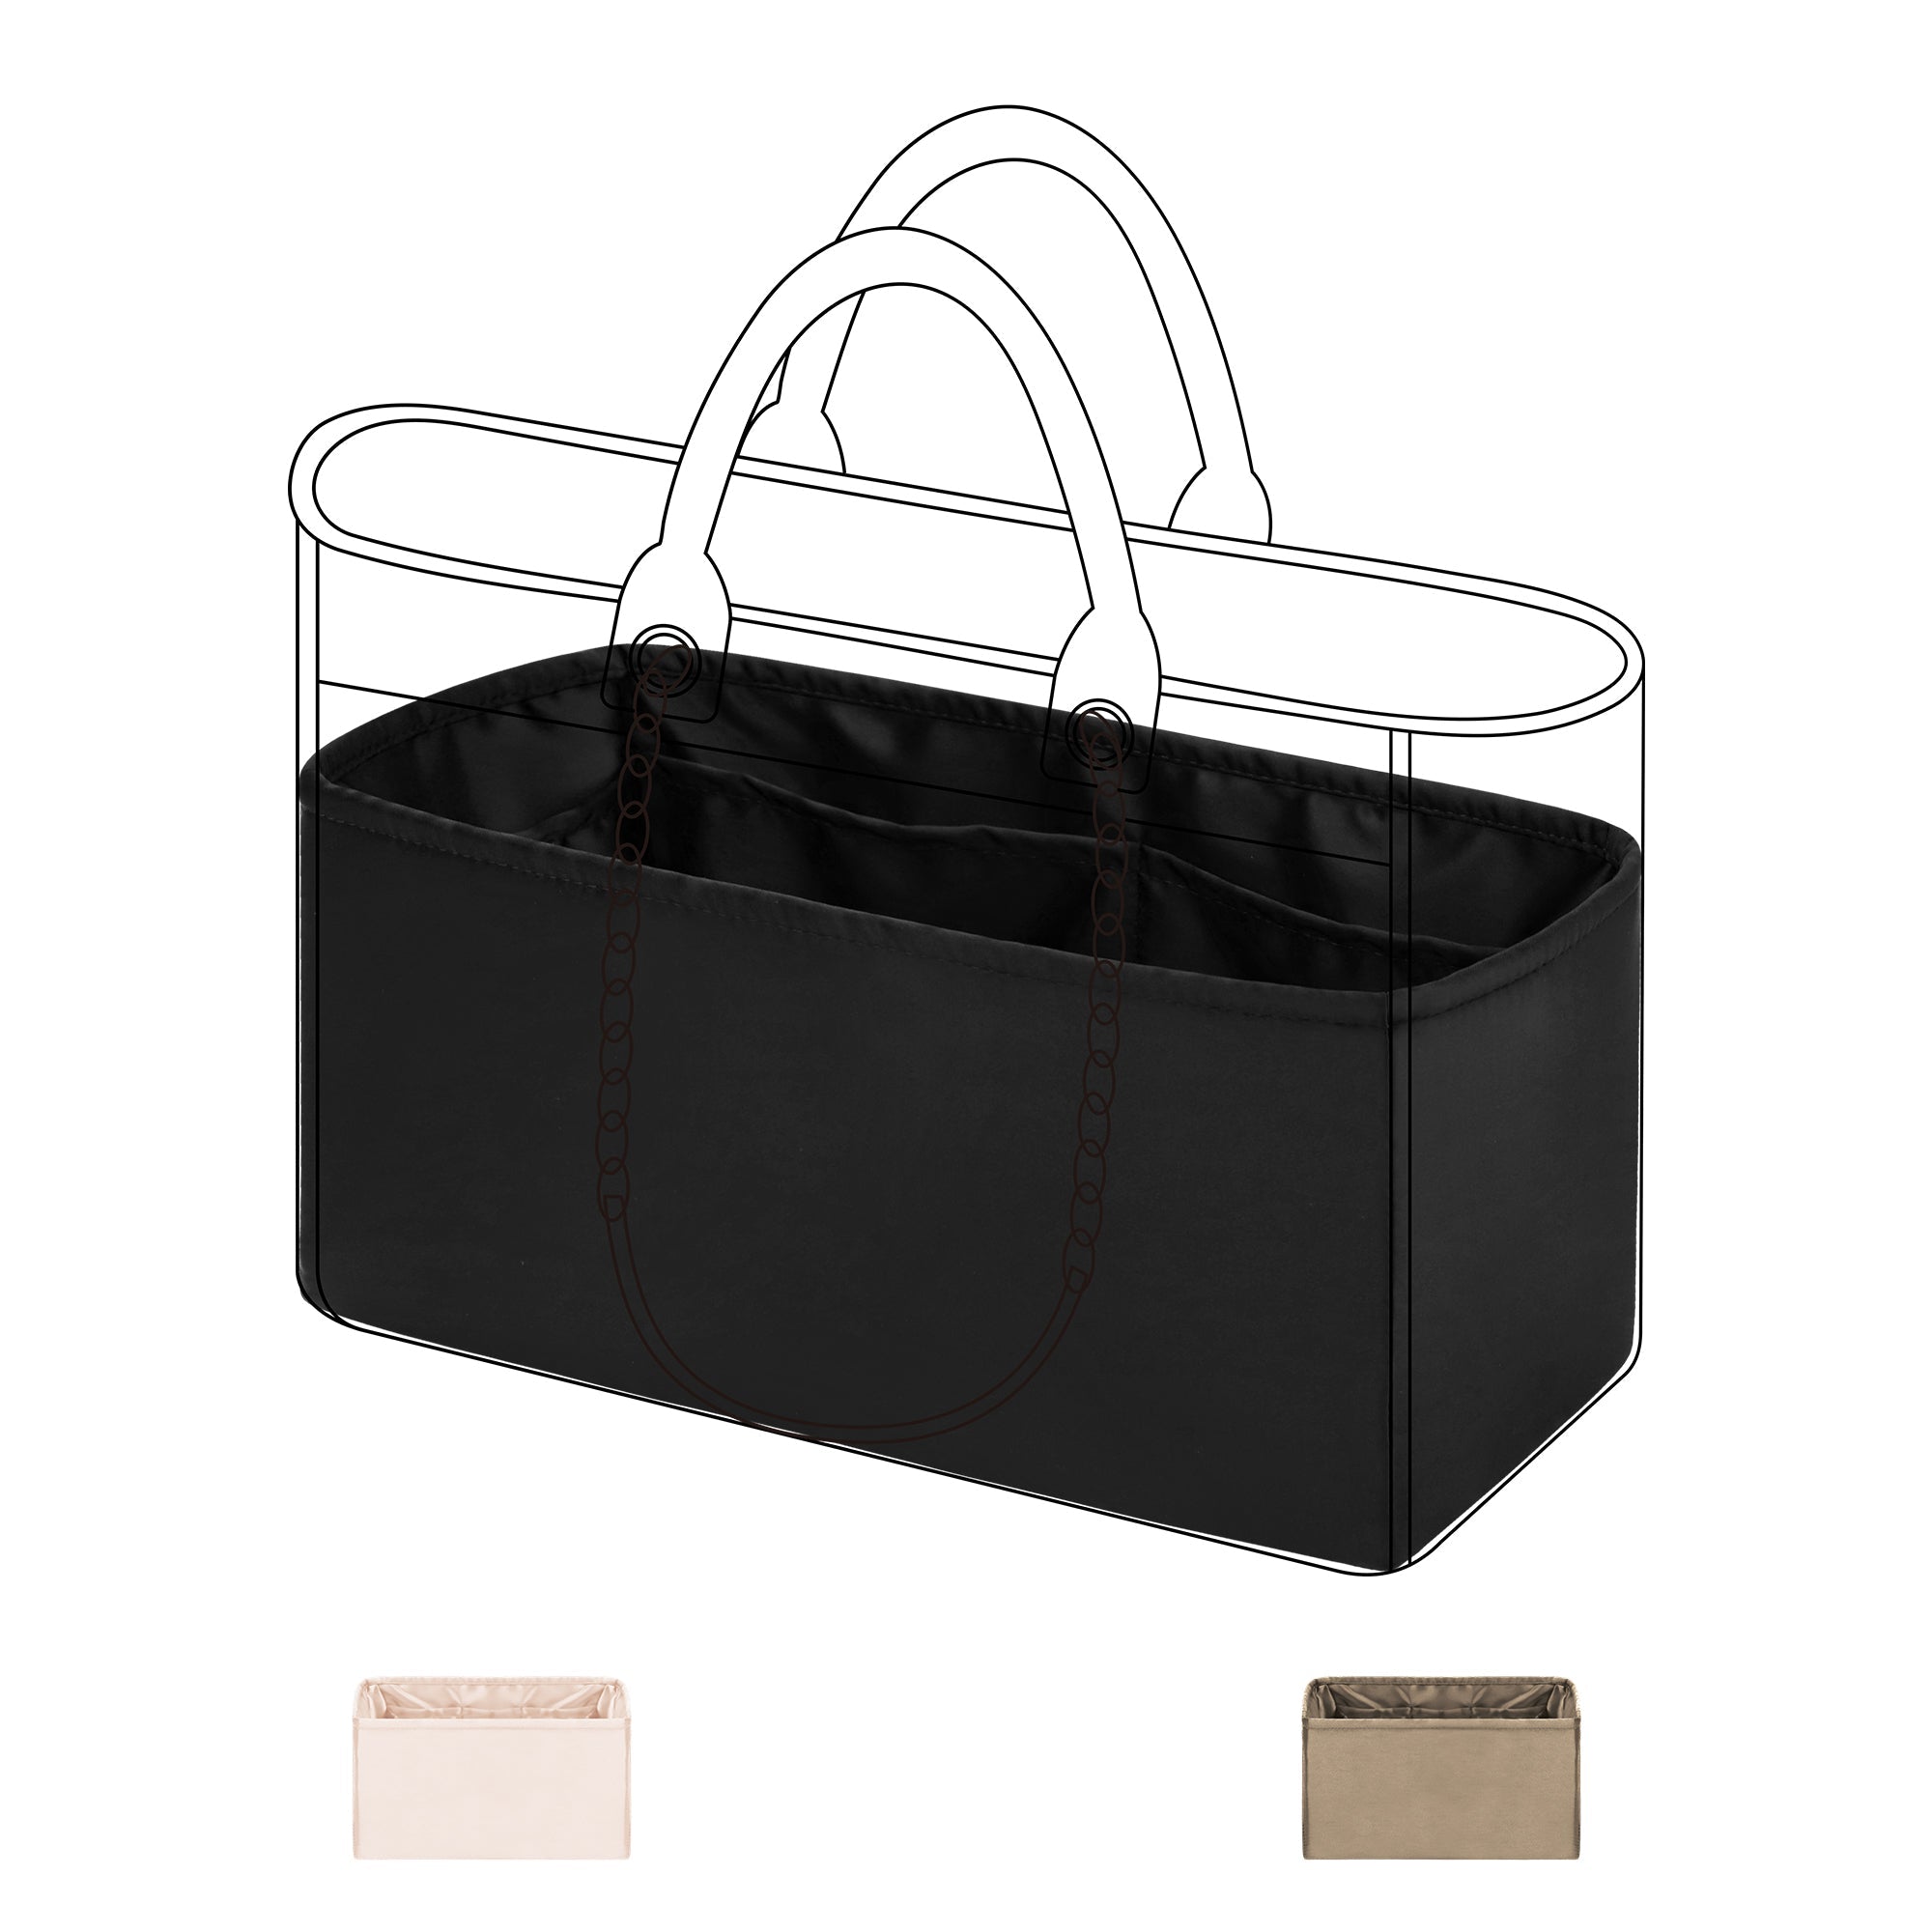 Baginbag | Purse Organizer Insert | Chanel Deauville Canvas Bag | Silk Bag Organizer | Purse insert  Handbag & Tote Shaper | purse insert organizer